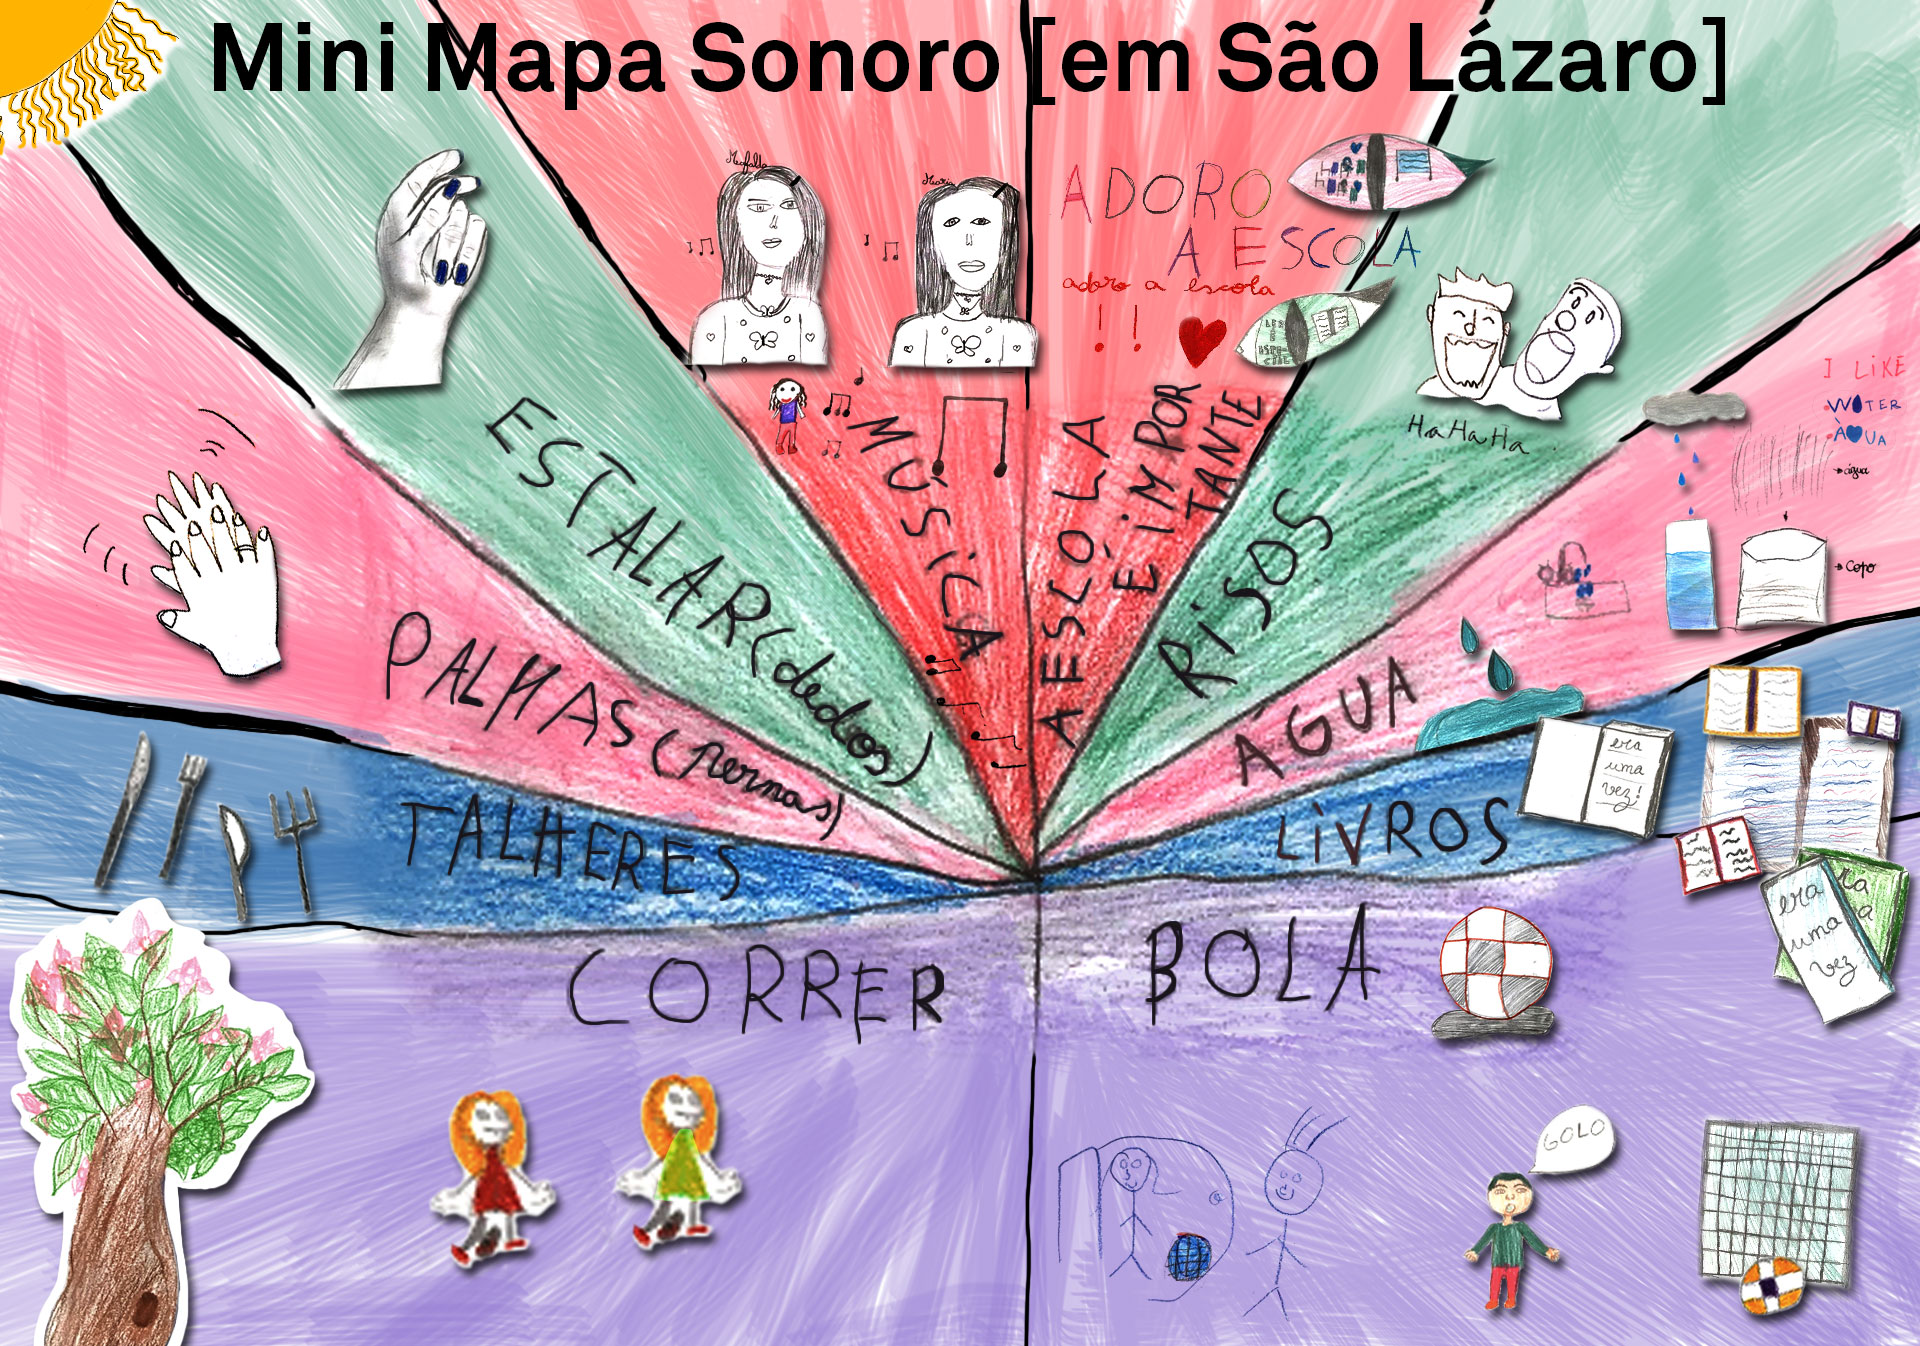 Mapa Mini Mapa Sonoro Mini Mapa Sonoro em São Lázaro